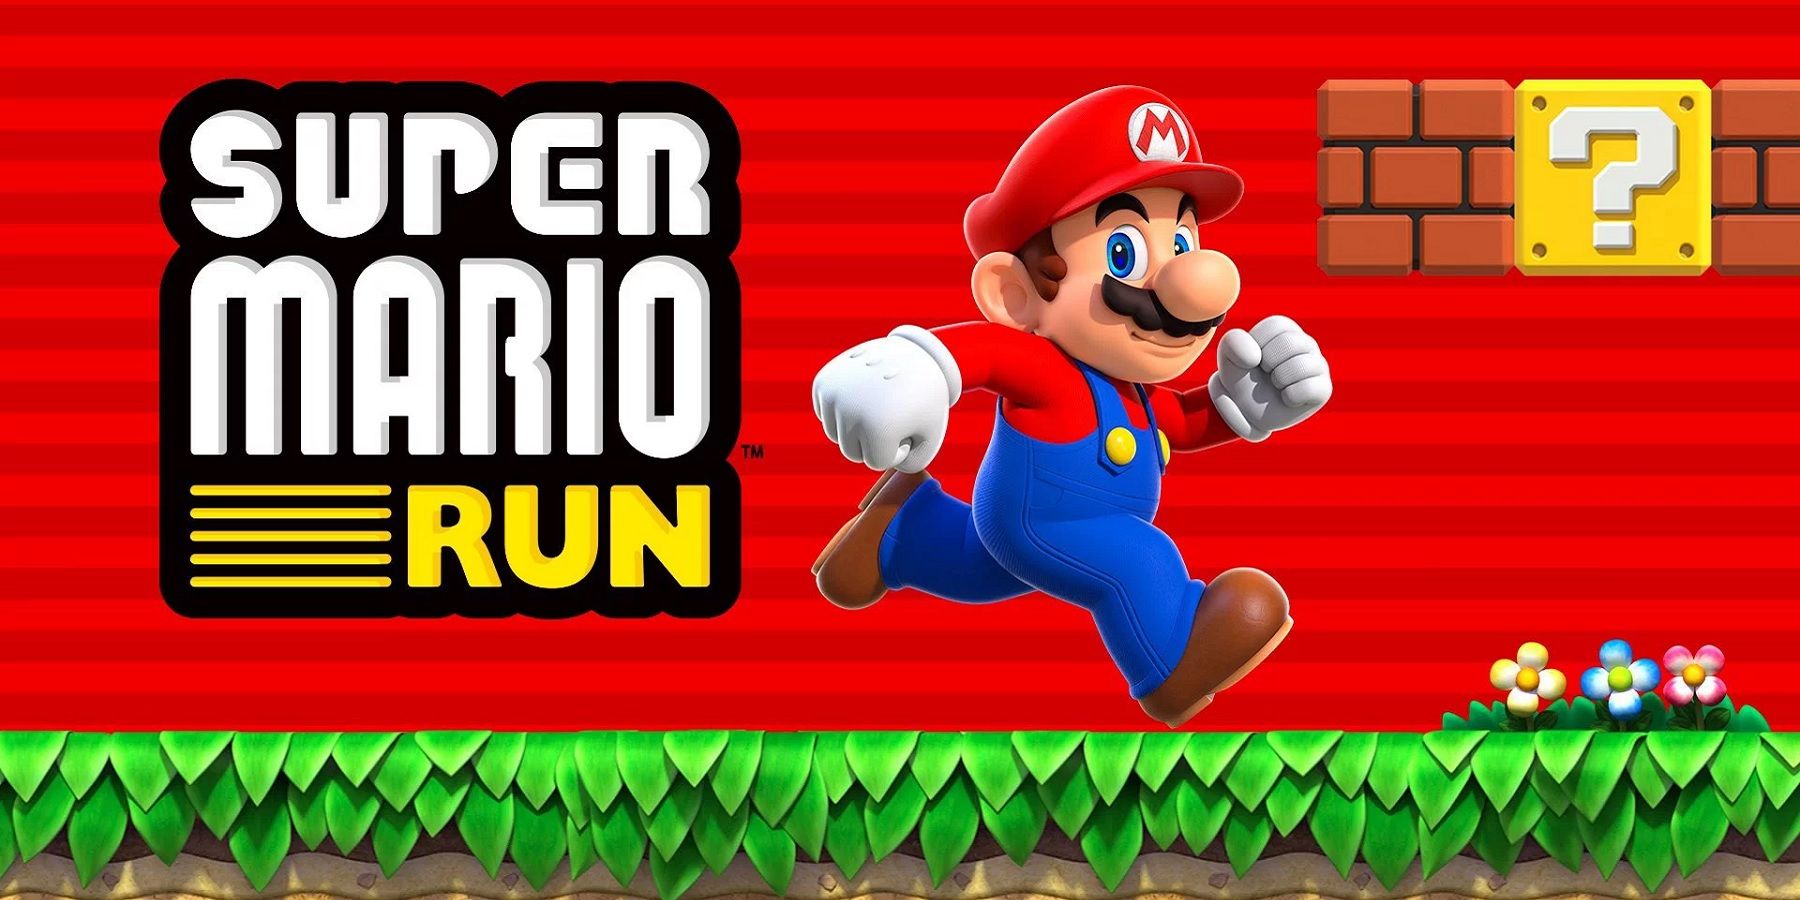 Super Mario Run title screen